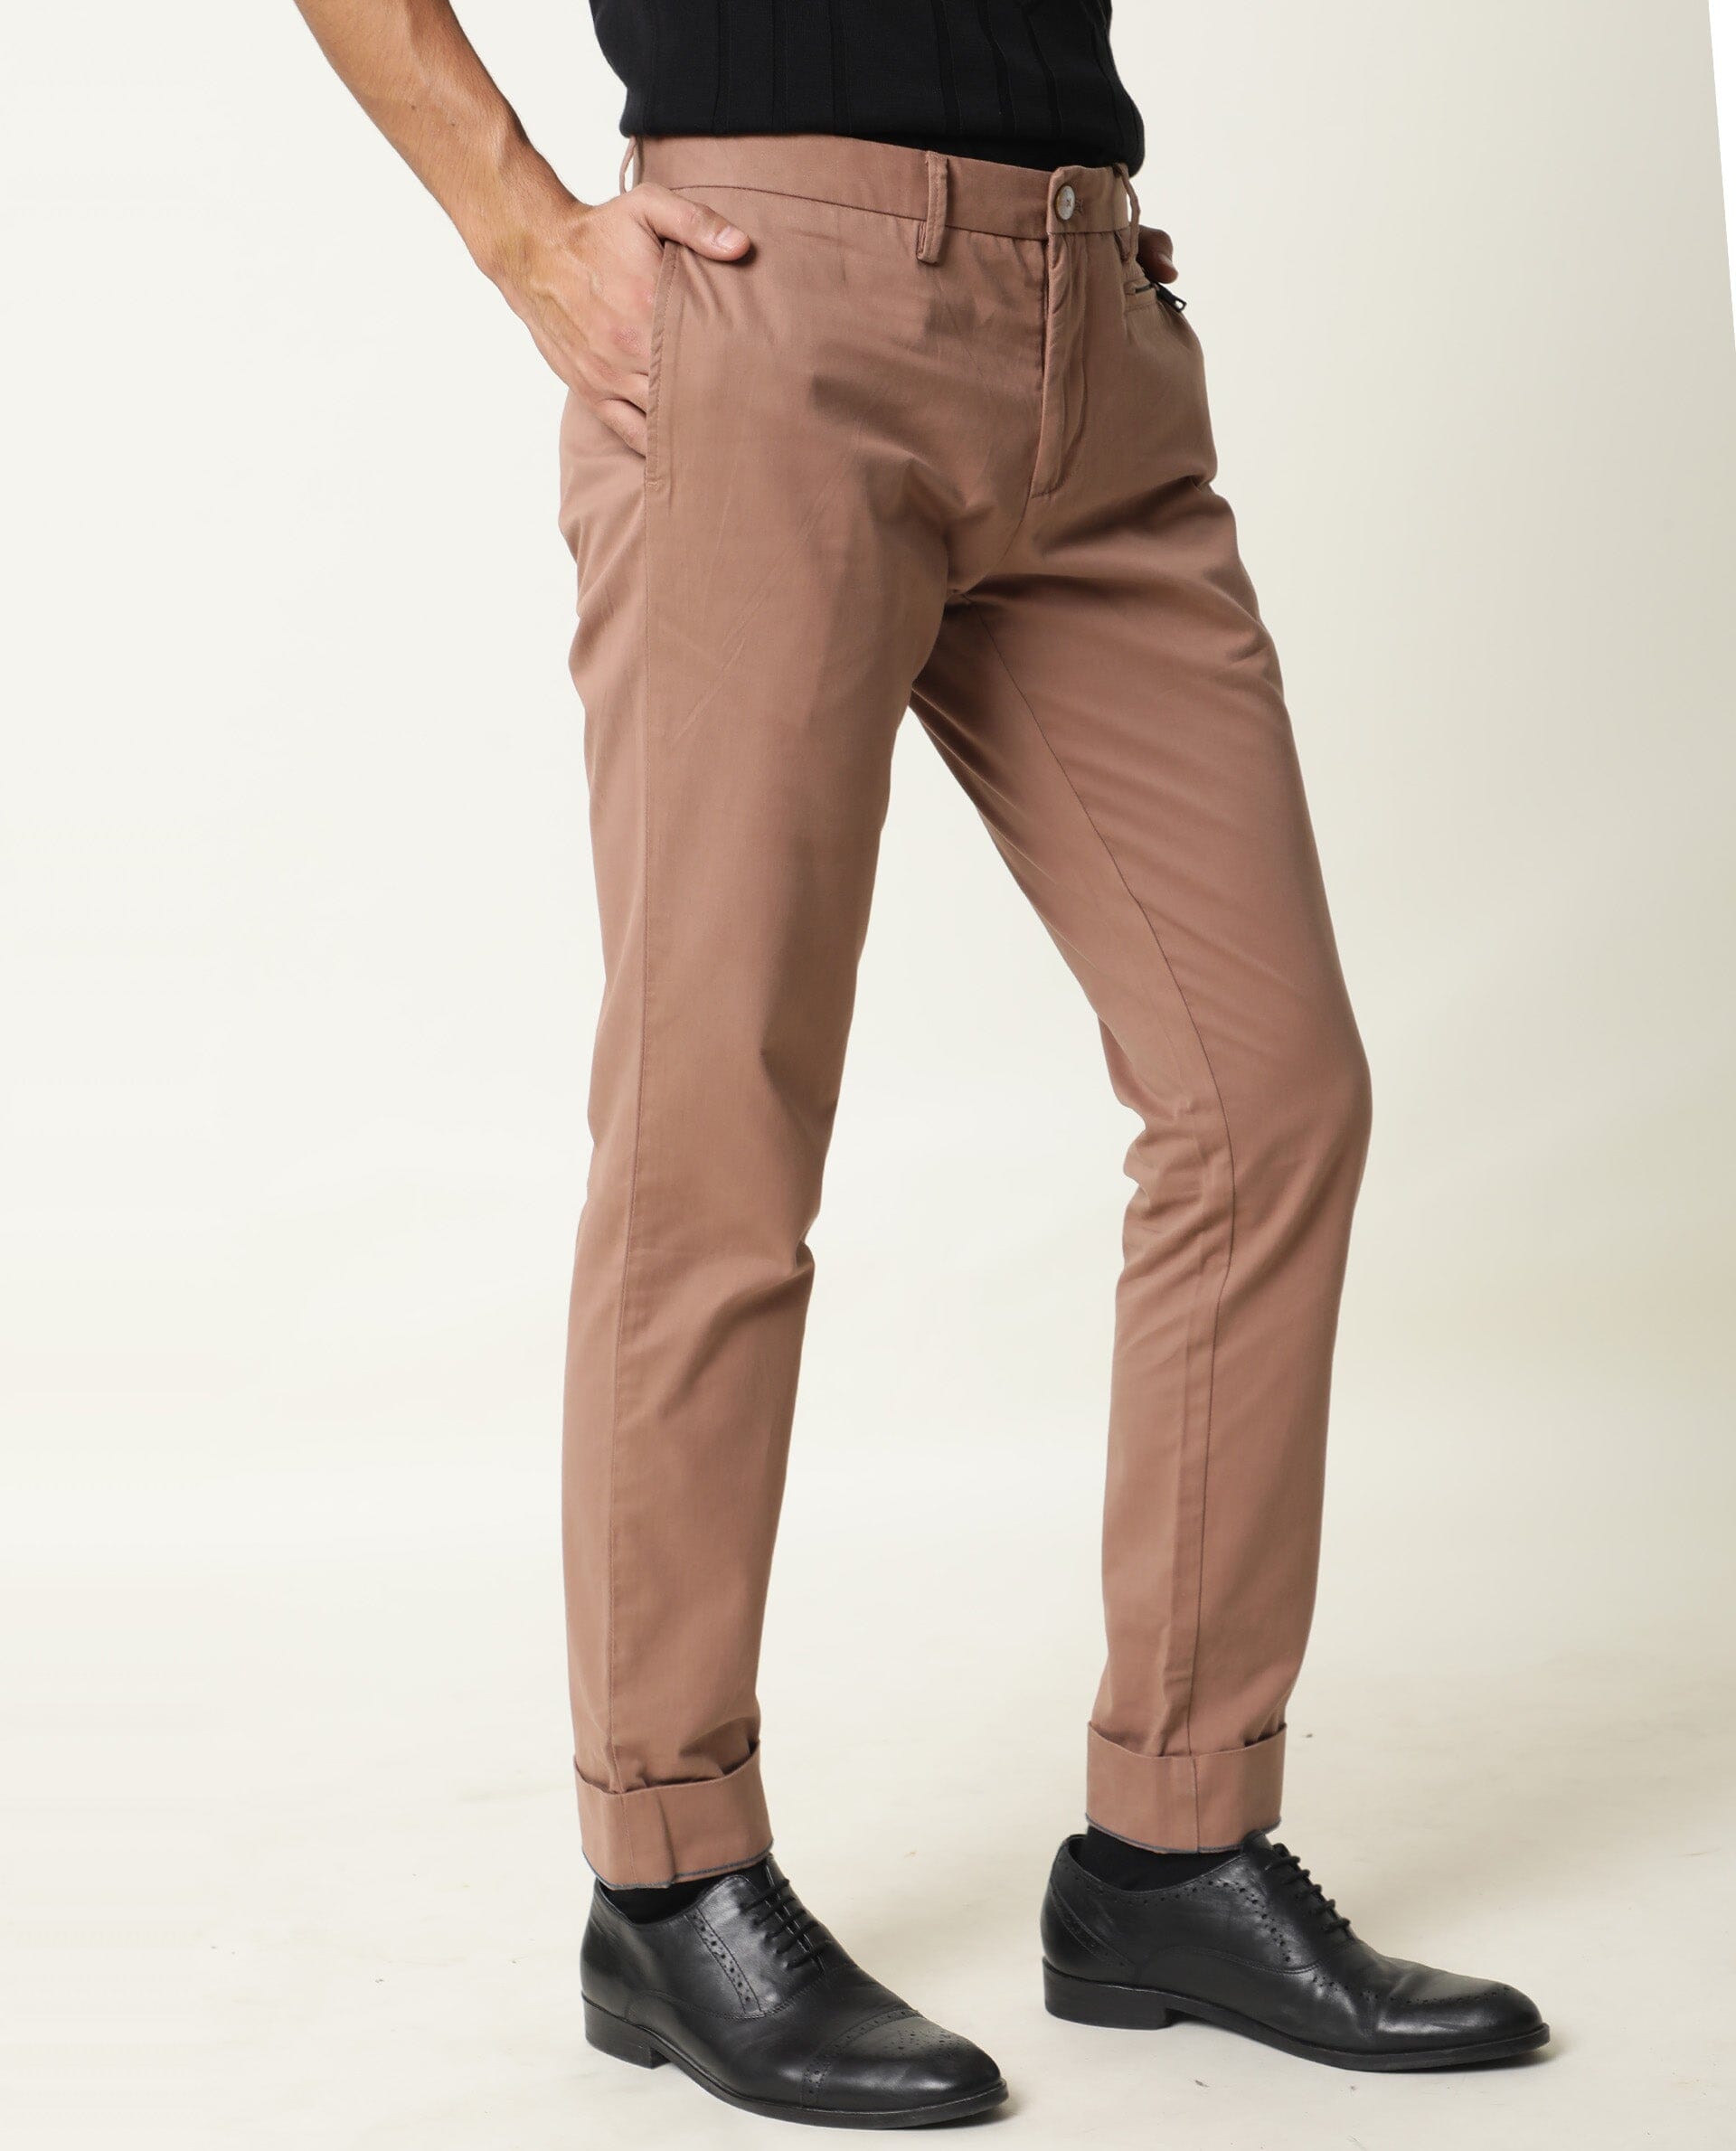 Formal Pants for Men  Mens Slim fit Formal Pant  Office wear Trousers   Dark Moor